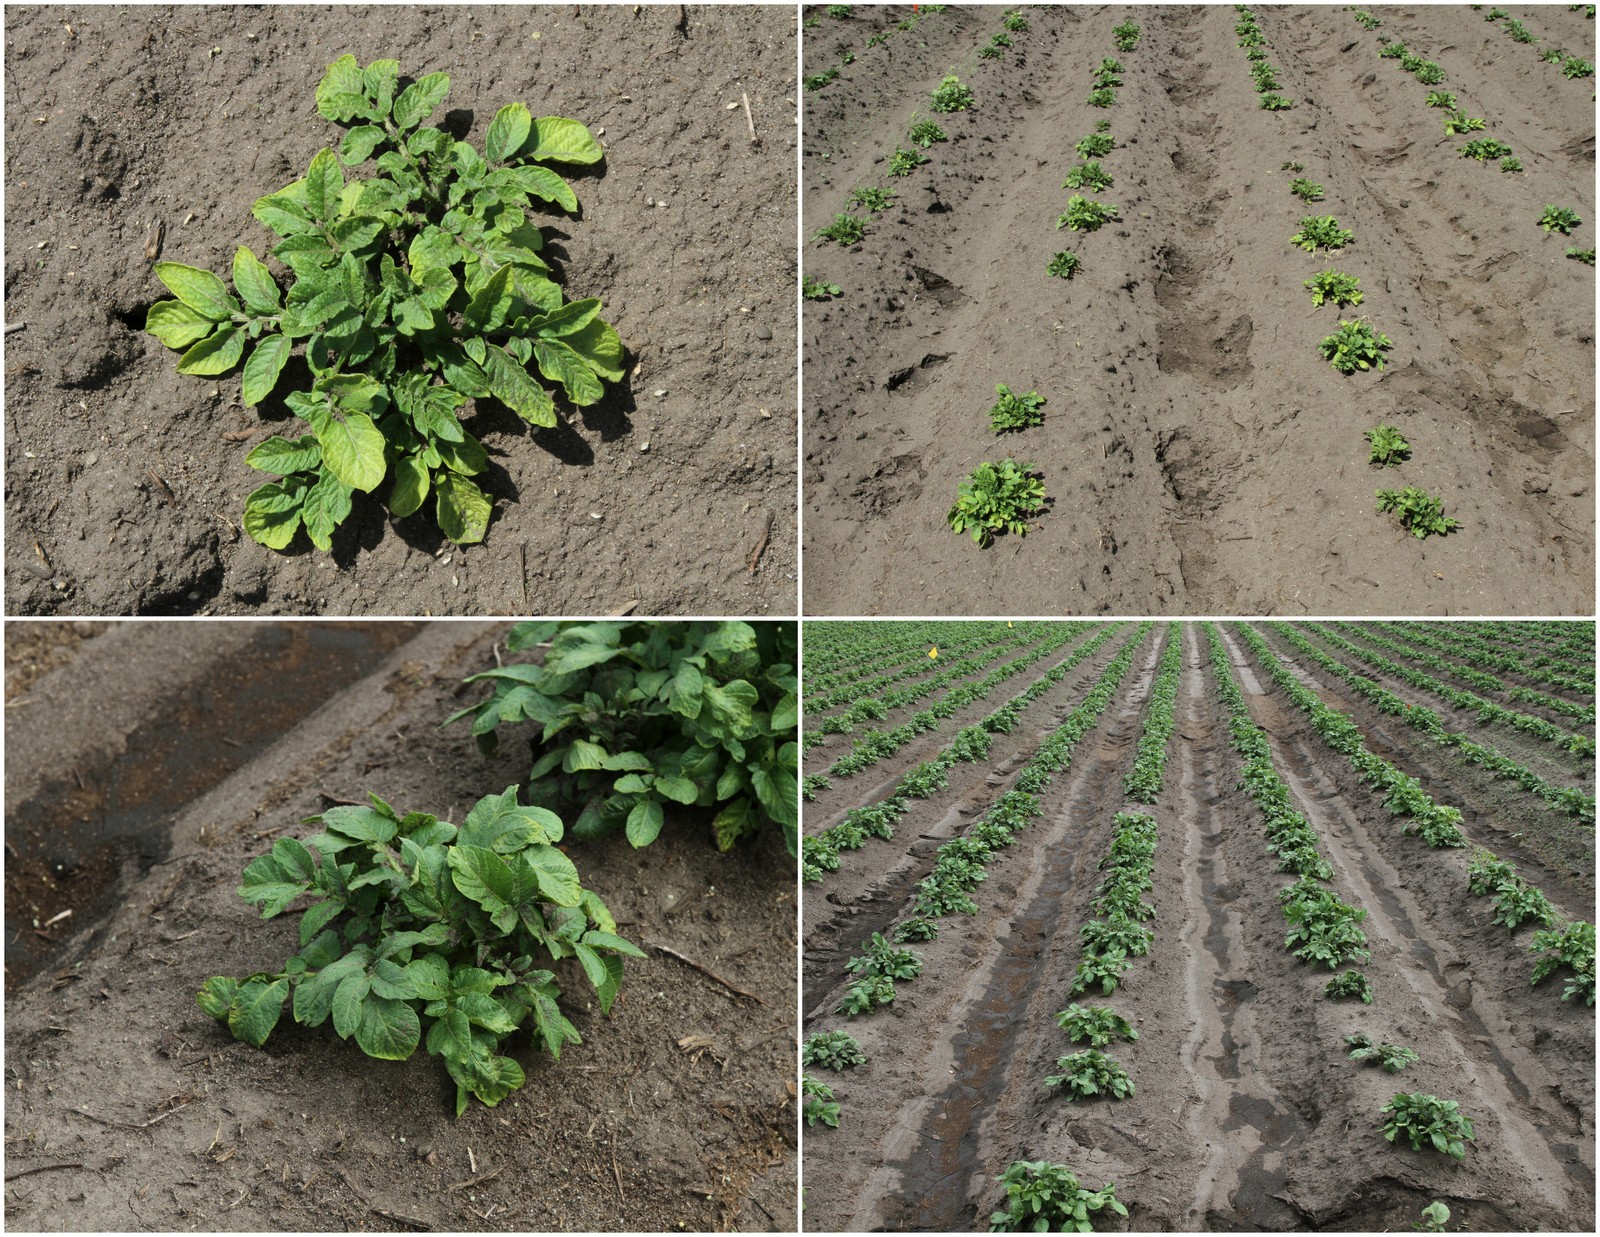 Unbelievable Success Stories of Weed Control in Potatoes: Linex + Metribuzin